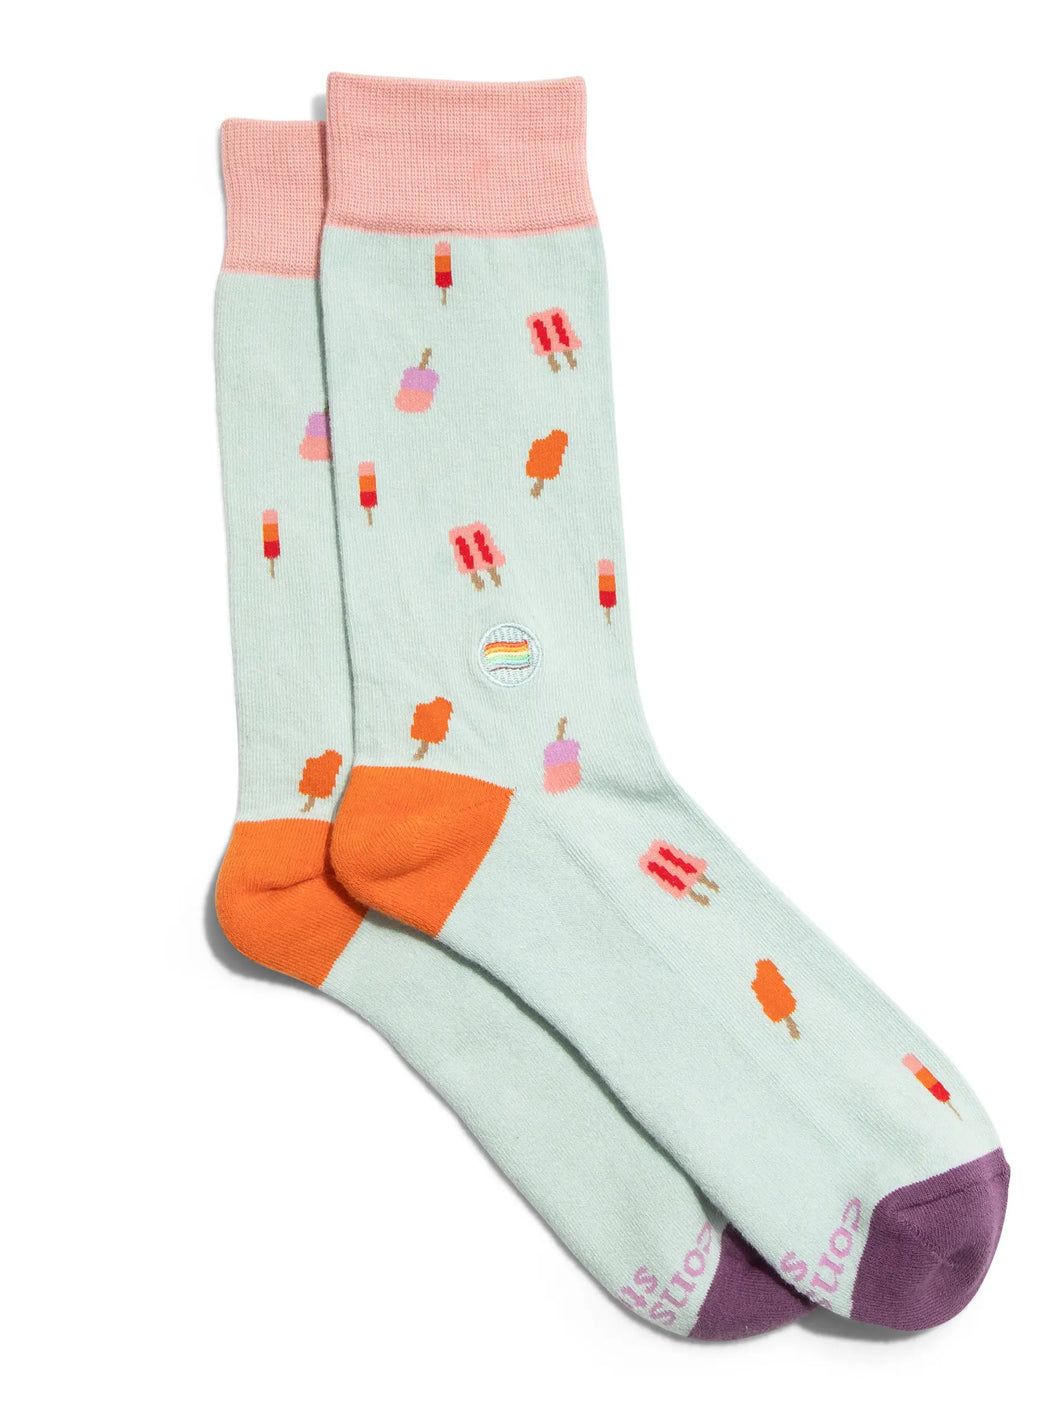 Socks that Save LGBTQ Lives (Orange Popsicles)